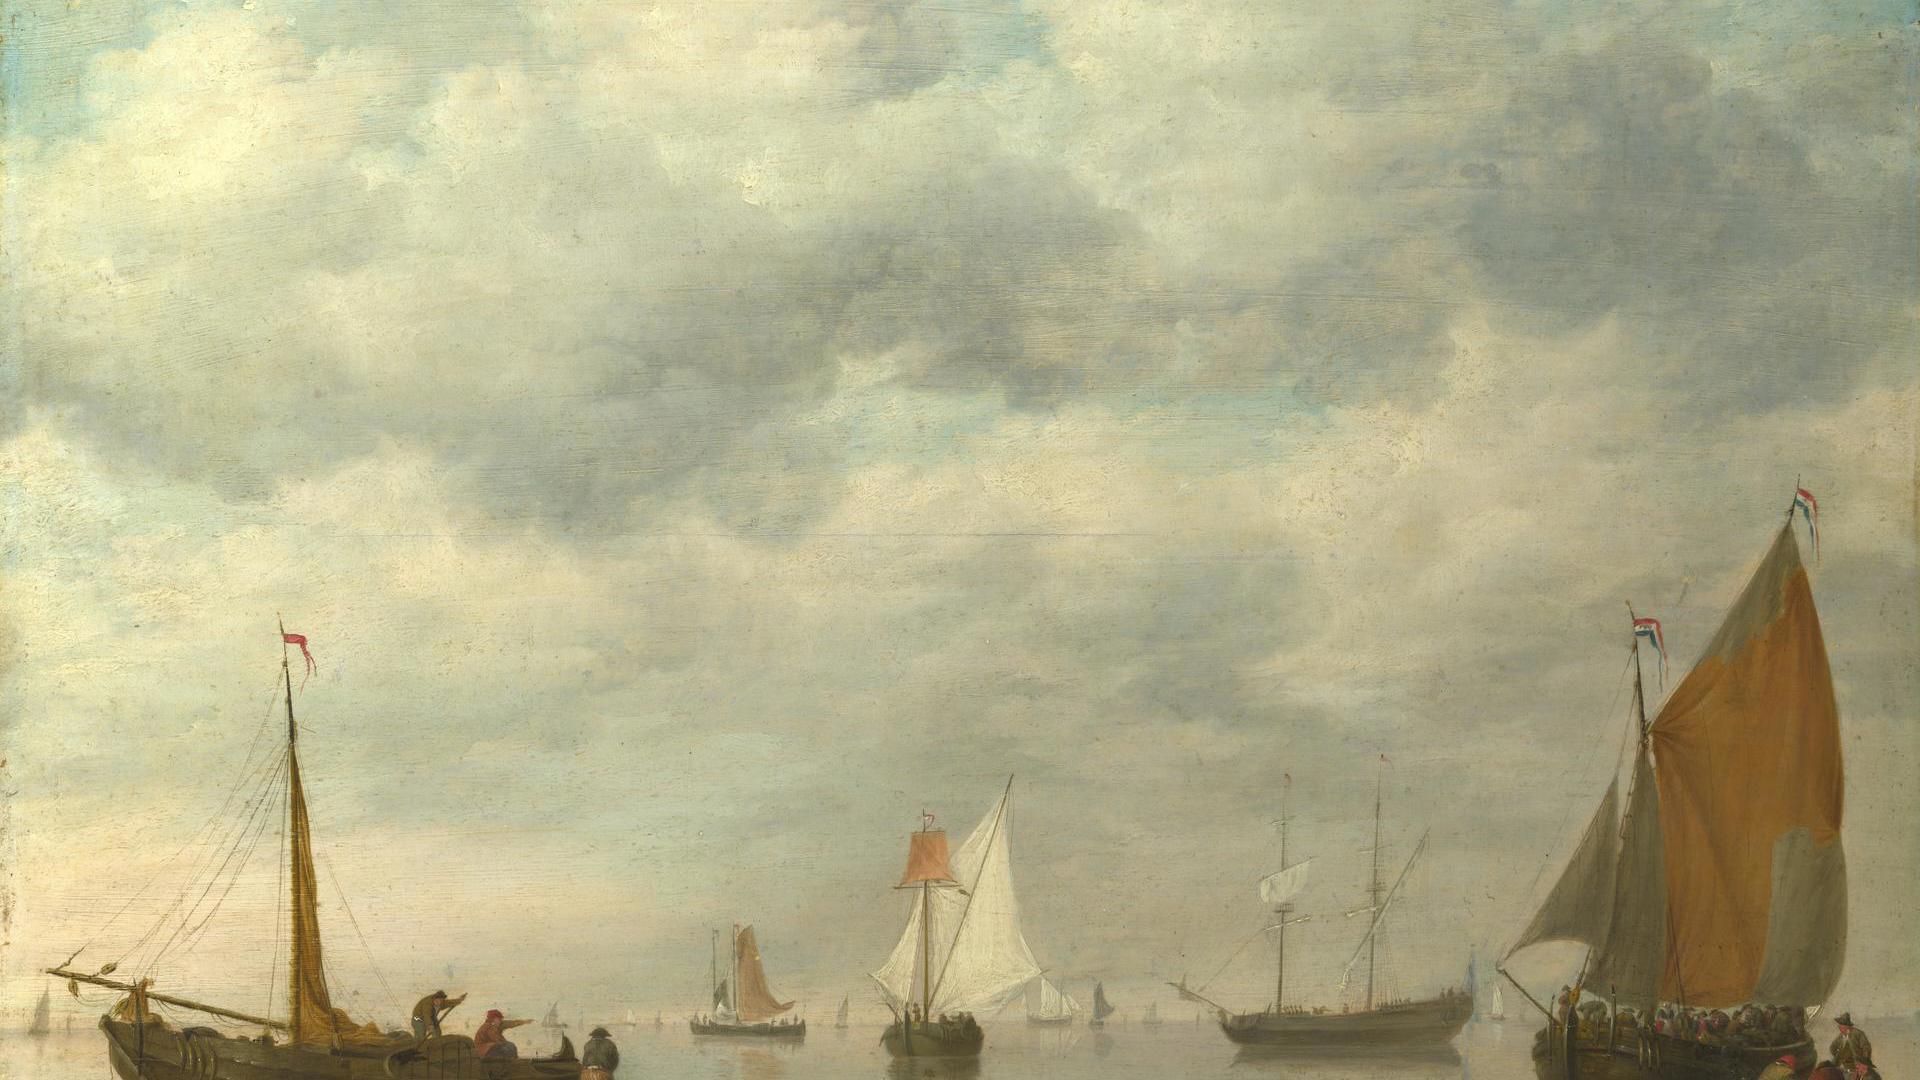 Dutch Vessels in Calm Water by Jan van Os